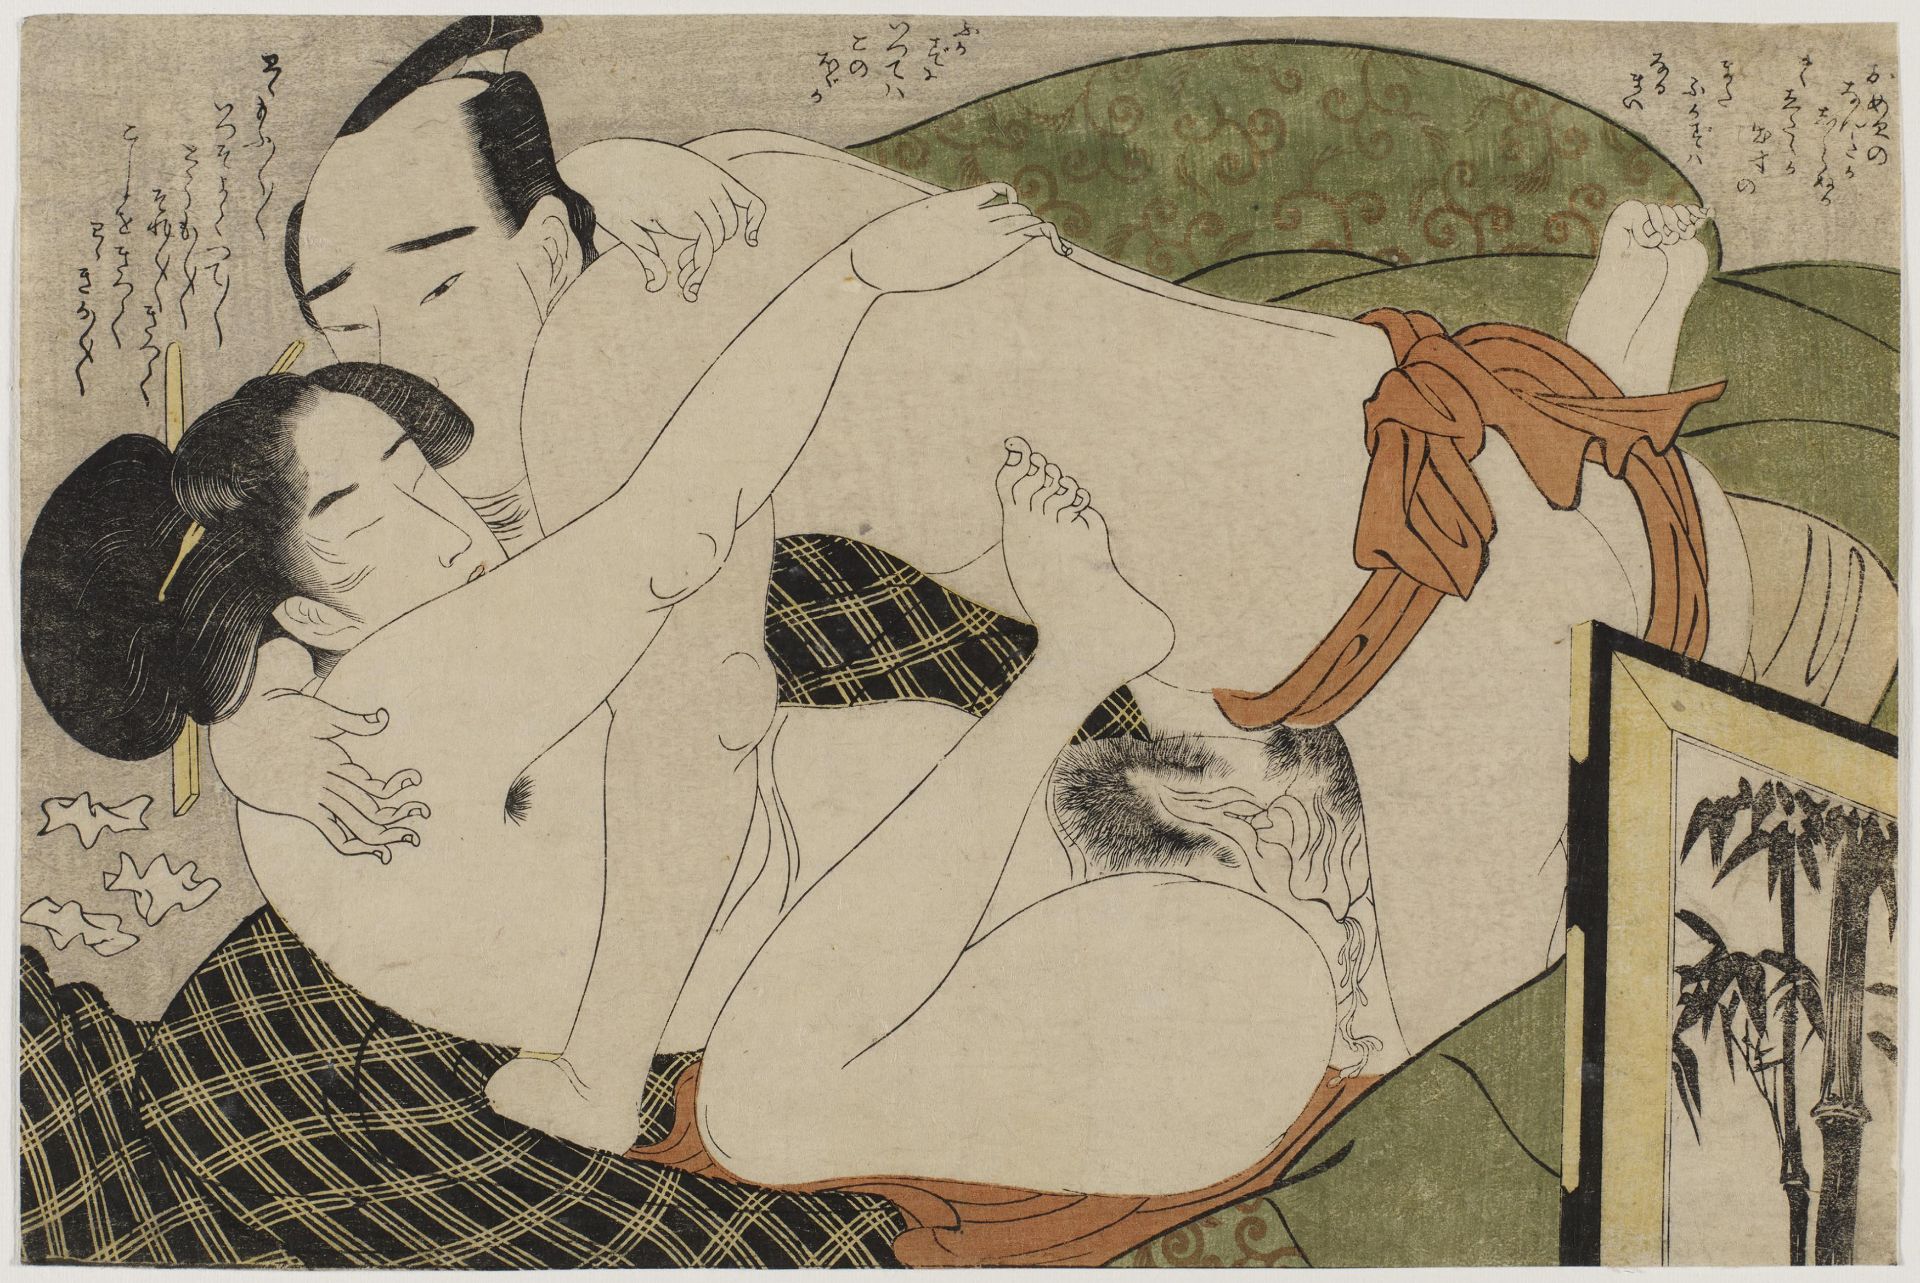 13 Blätter der Shunga-Serie "Fumi no kiyogaki" - Image 10 of 27